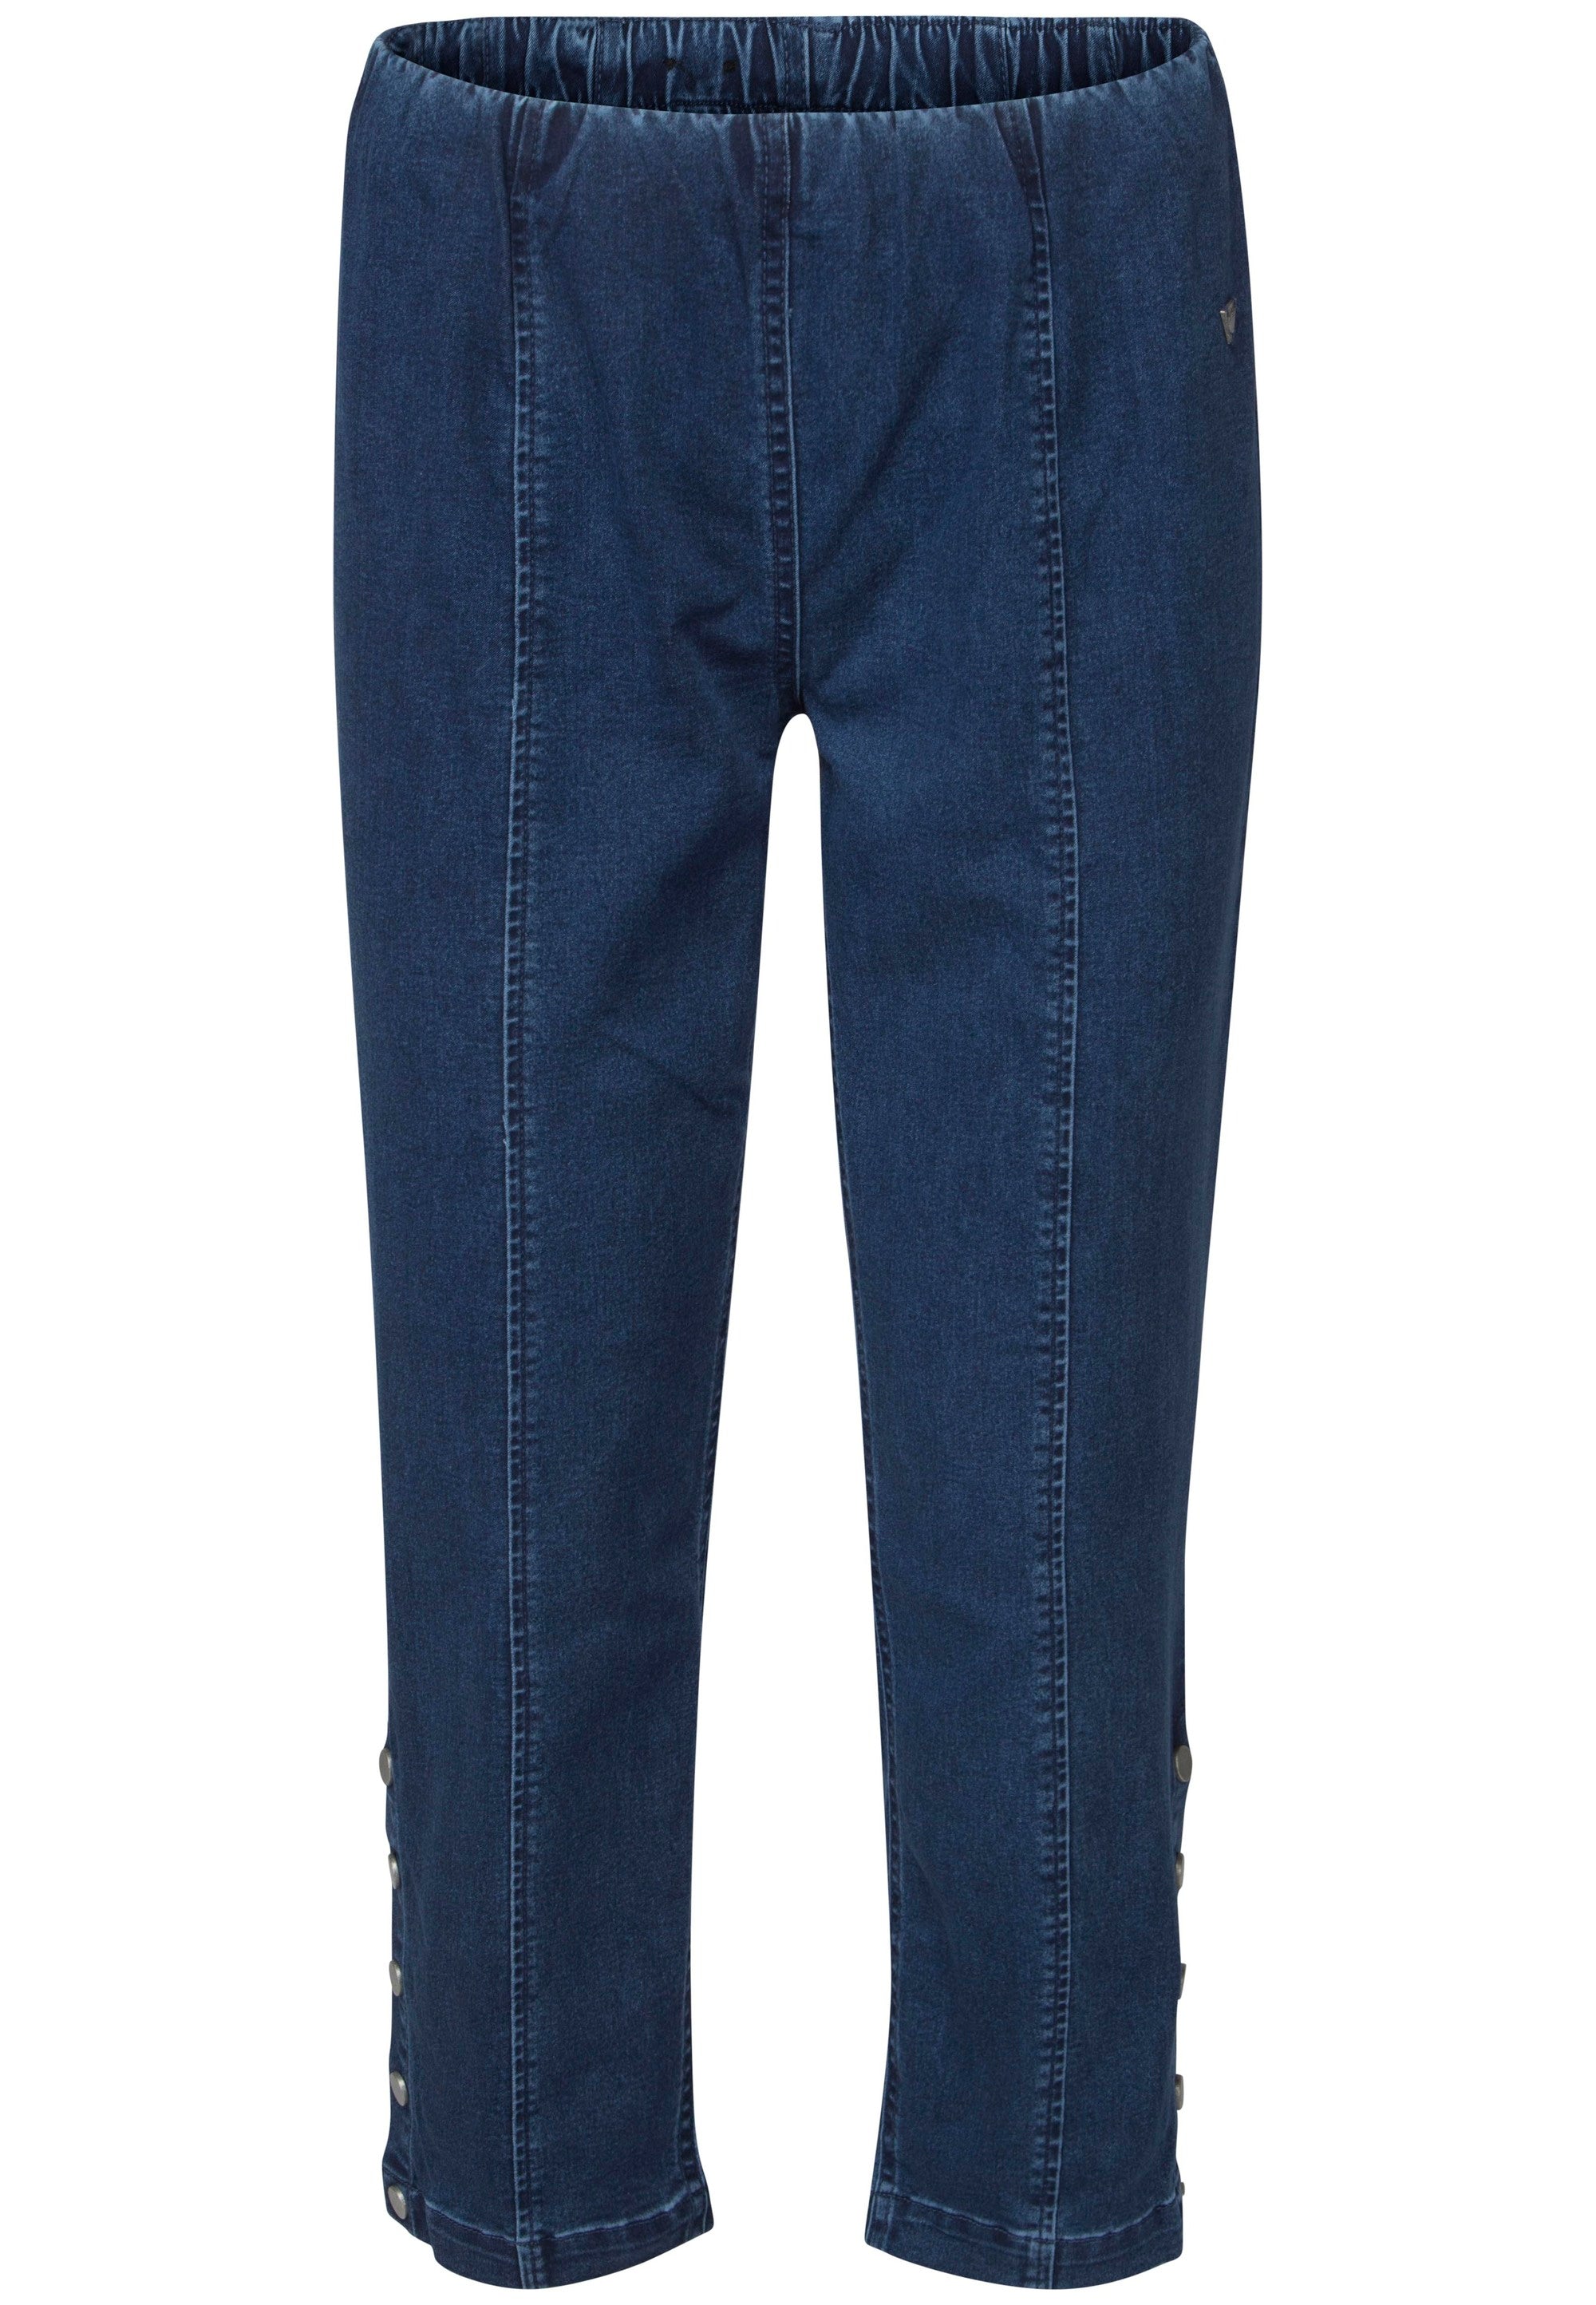 LAURIE Polly Regular Crop Trousers REGULAR 43515 Medium Blue Denim